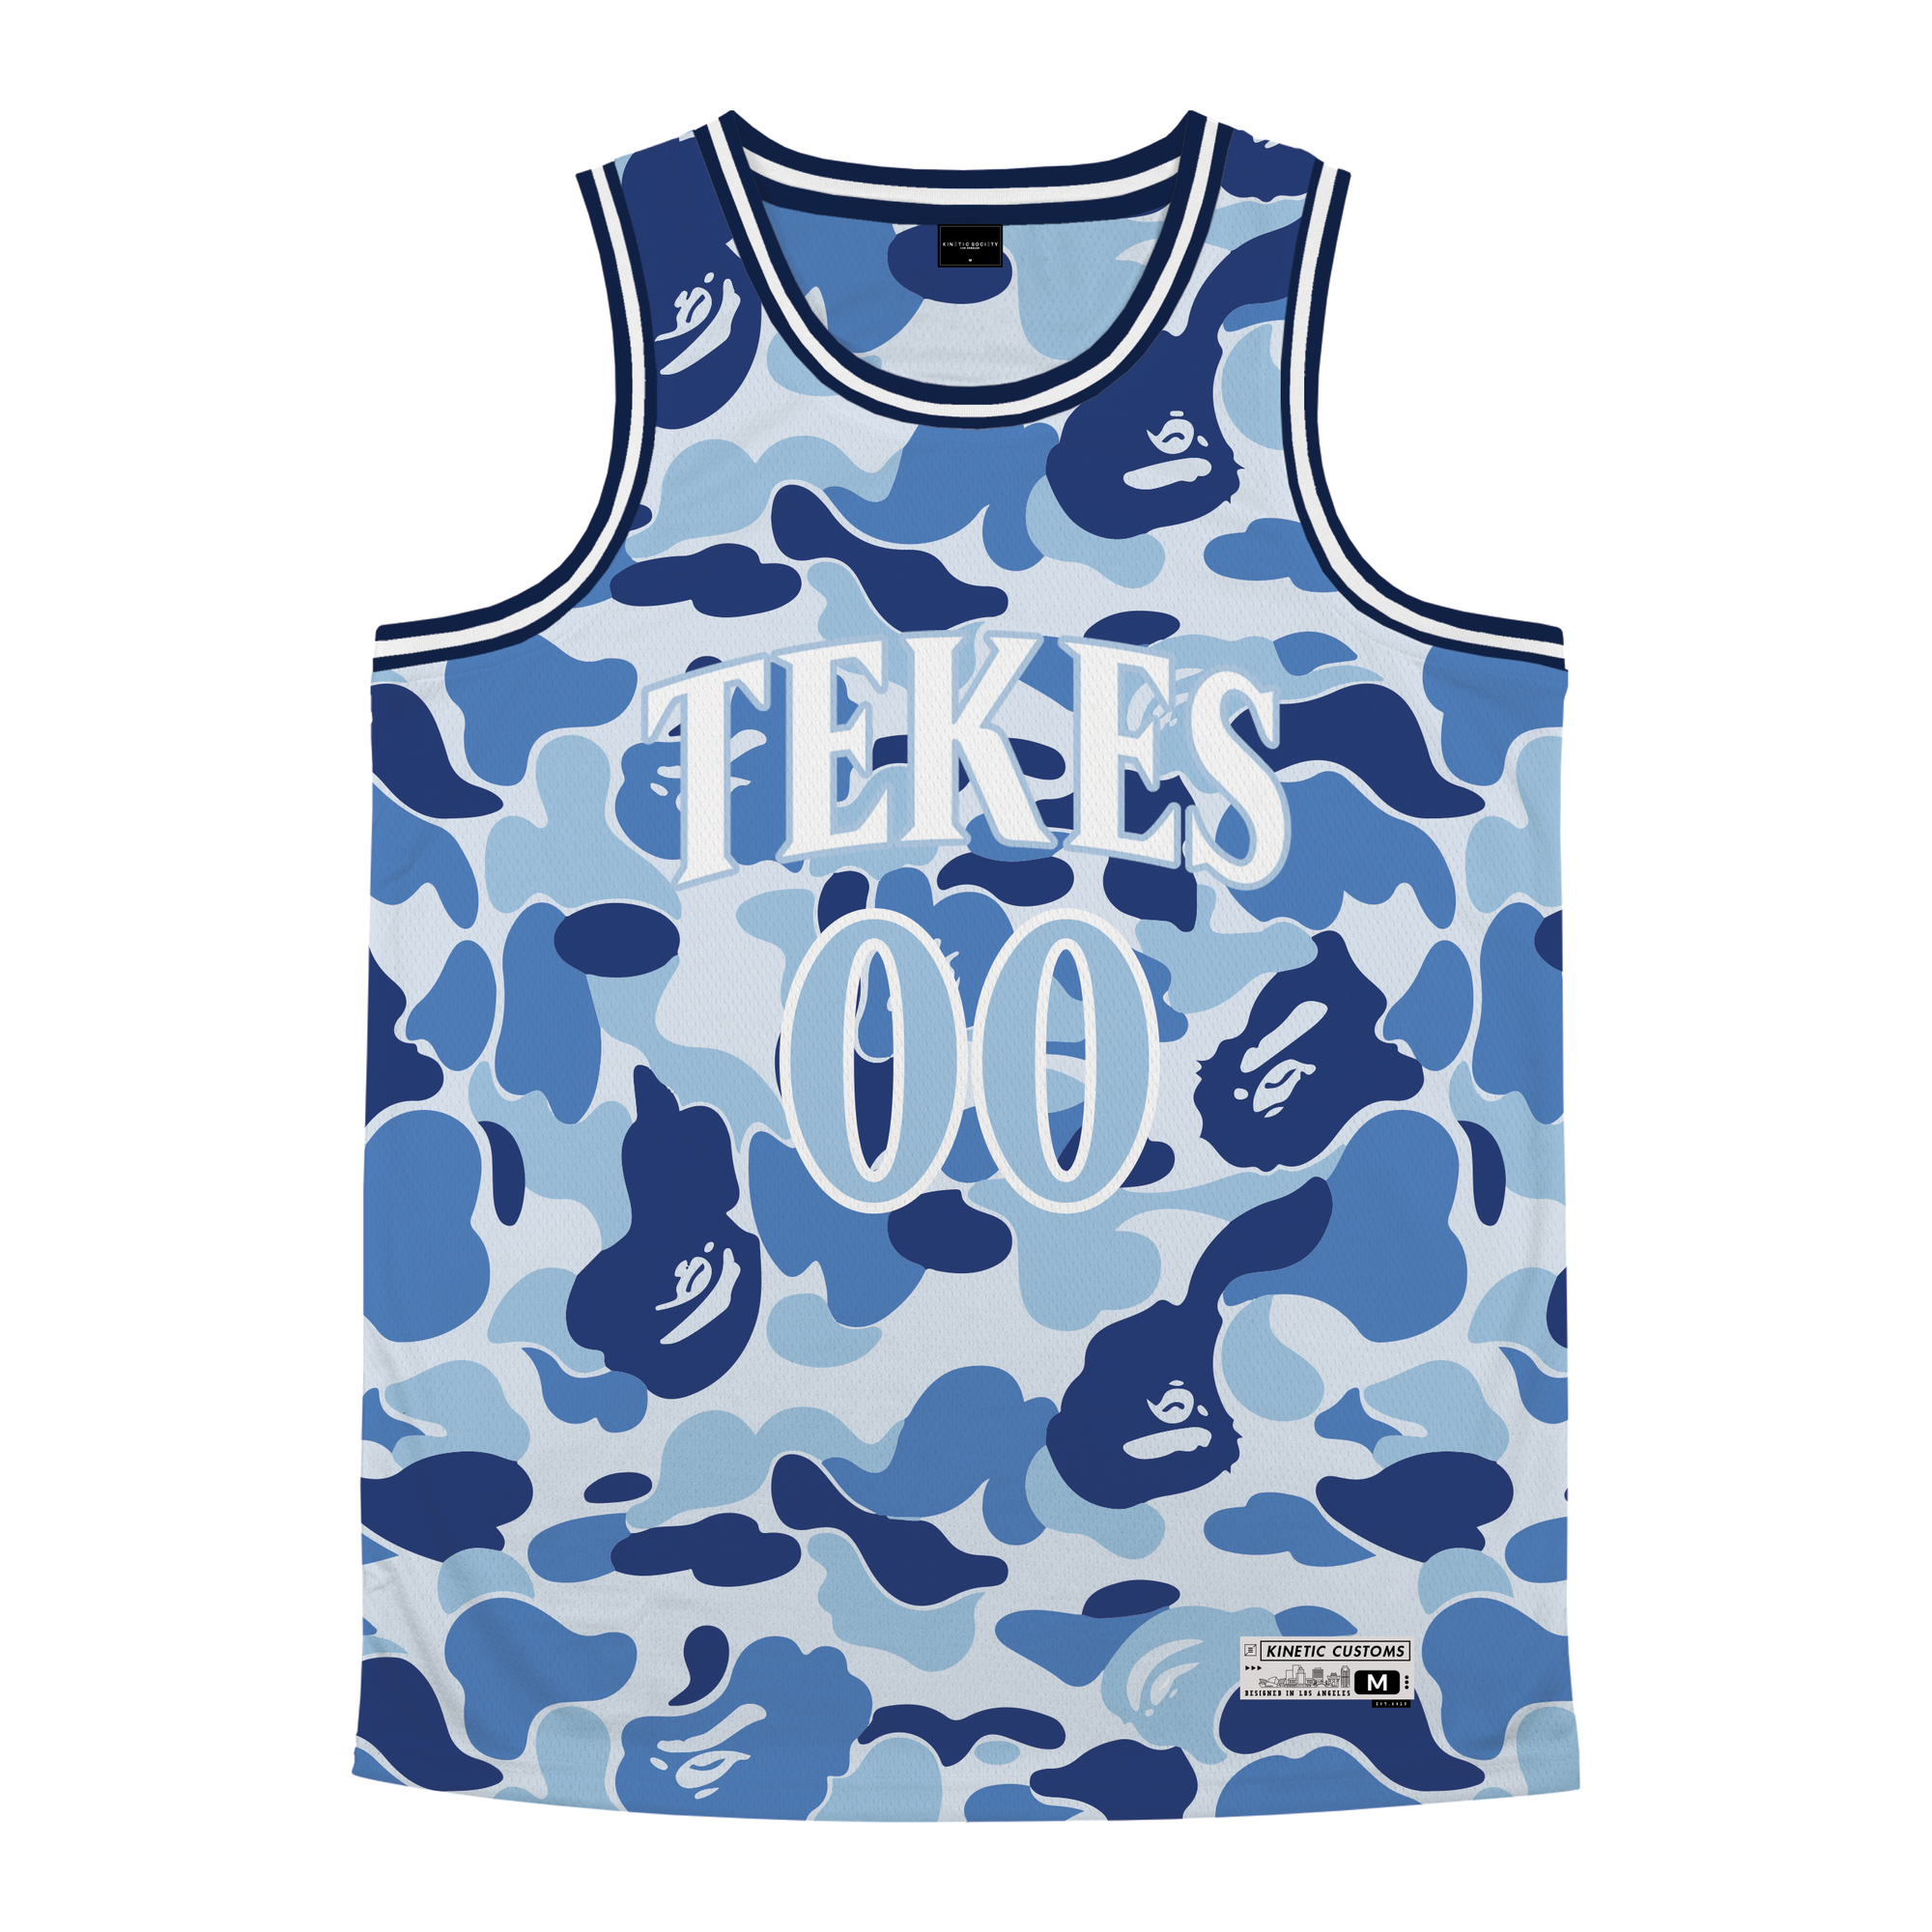 Tau Kappa Epsilon - Blue Camo Basketball Jersey